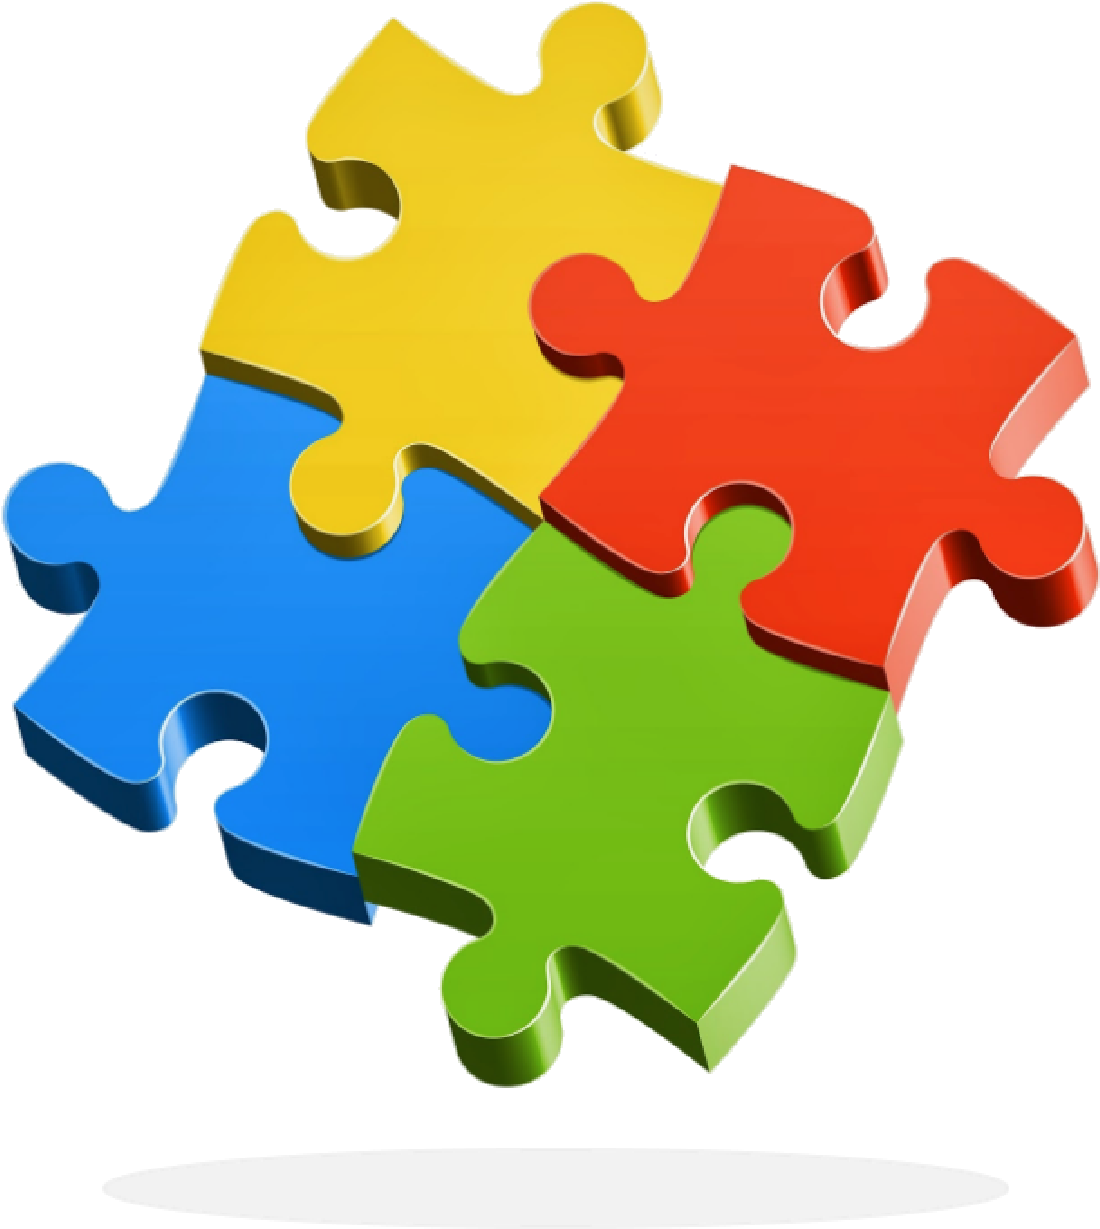 Image Of Puzzle Pieces - Autism Spectrum Disorder Puzzle (1400x1418)